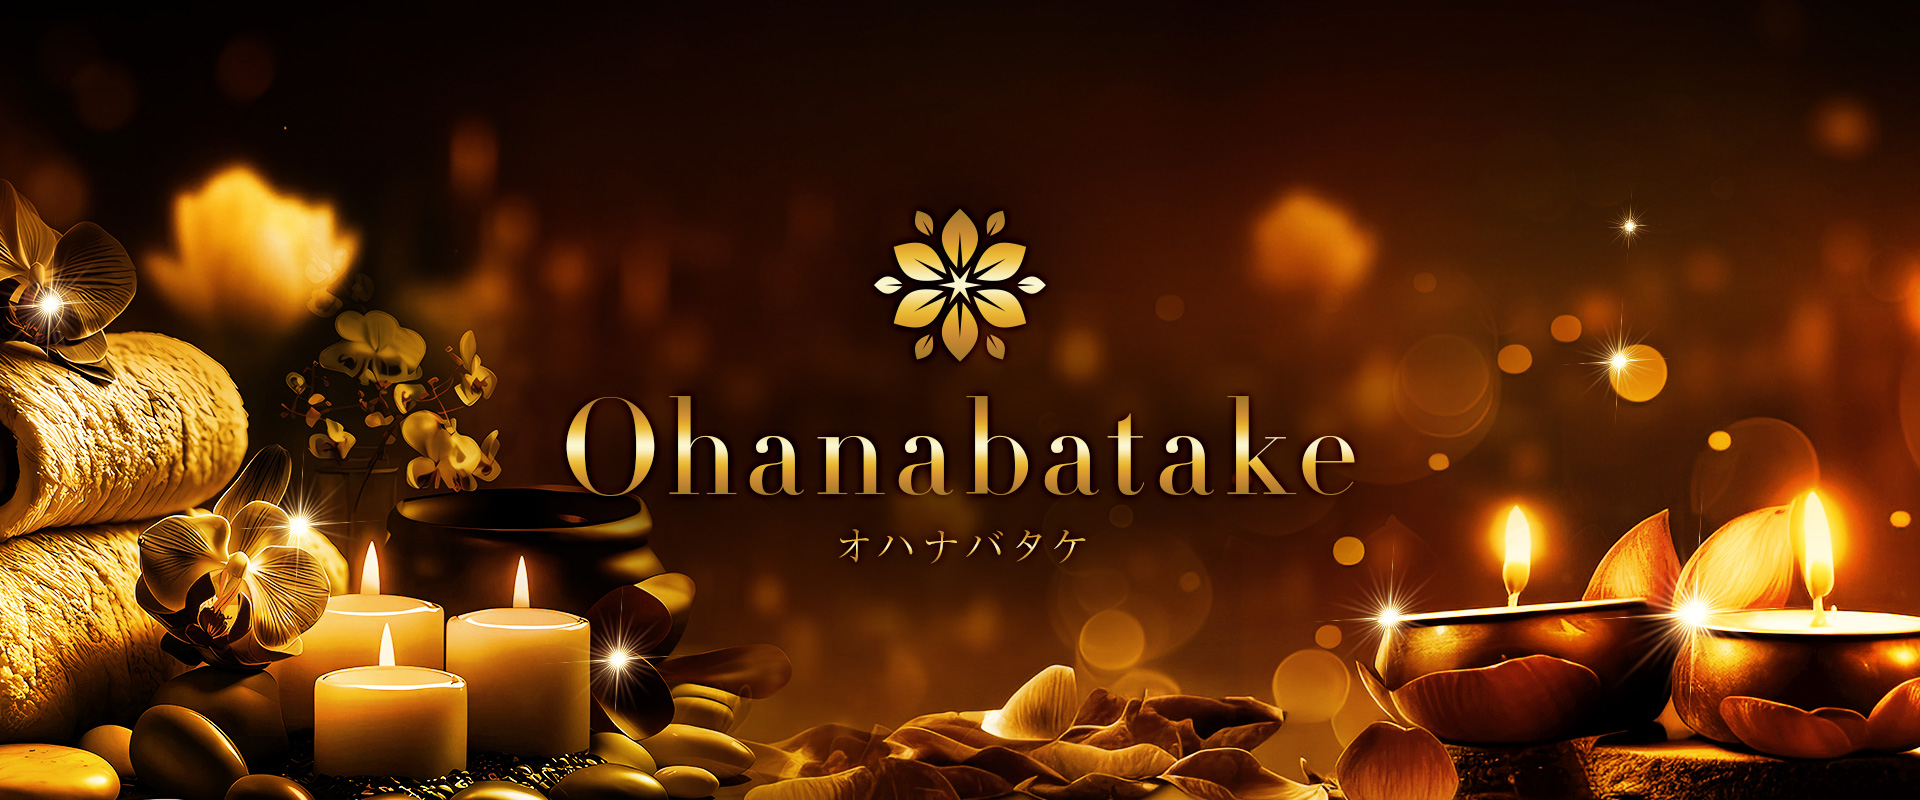 Ohanabatake (オハナバタケ)